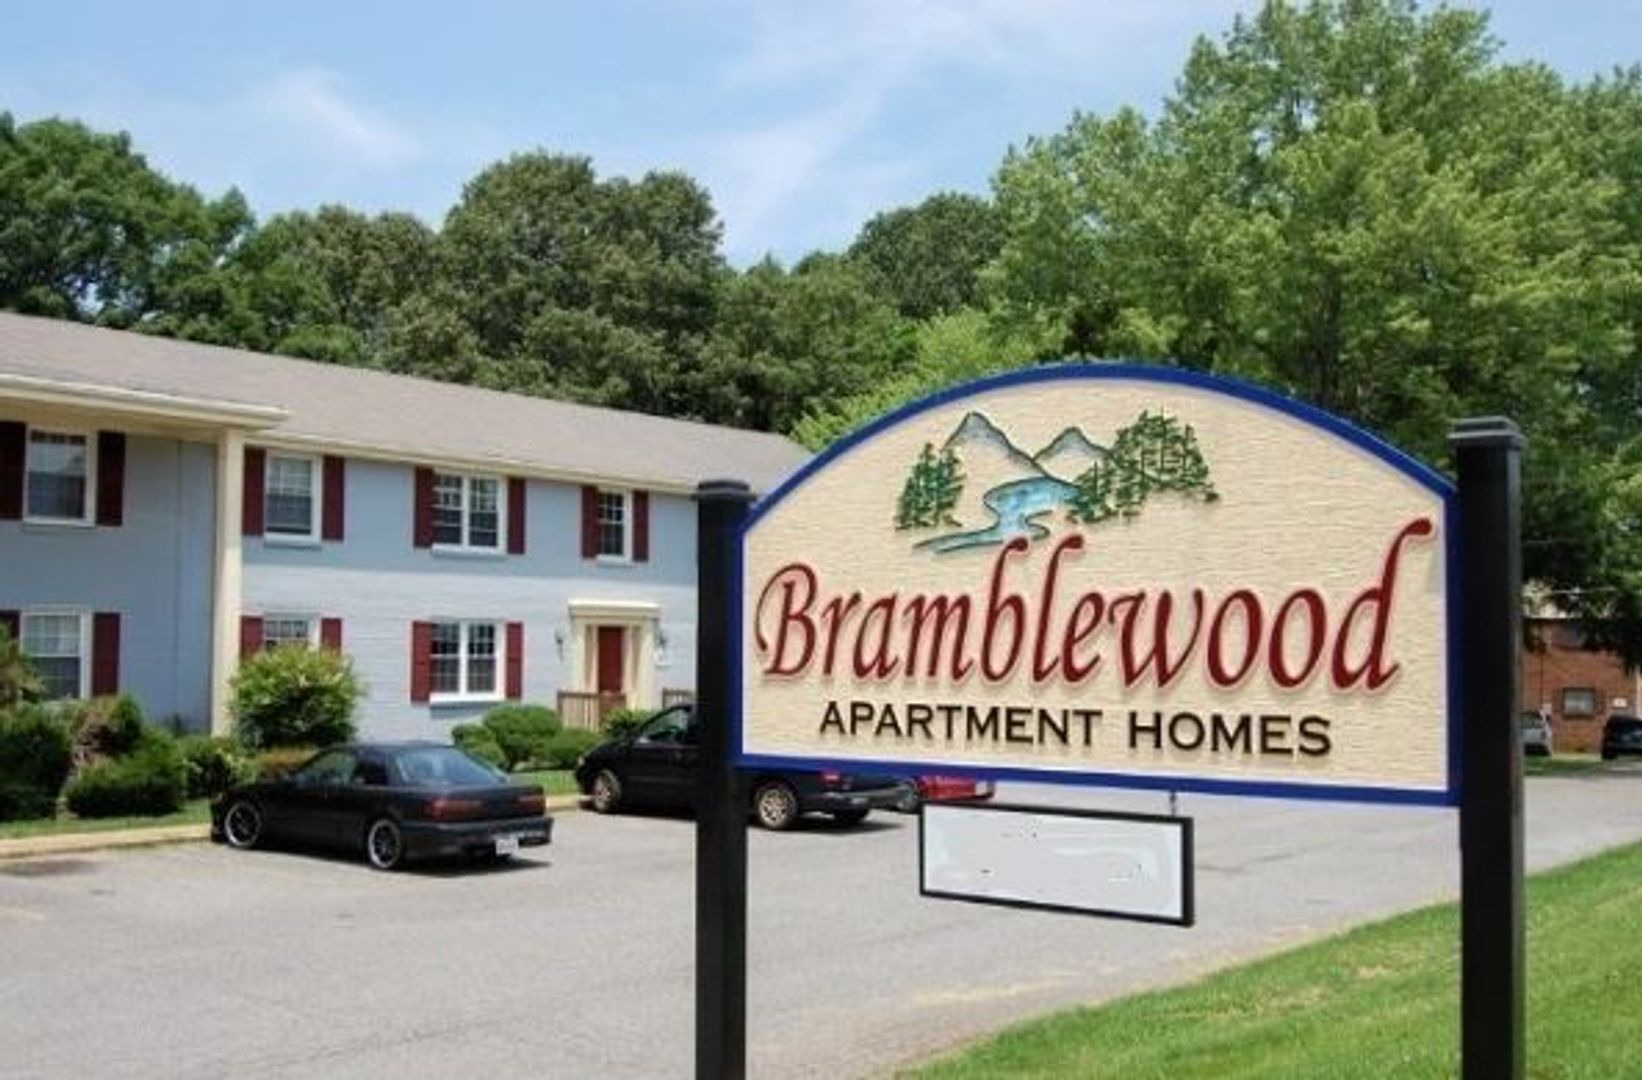 Bramblewood Description